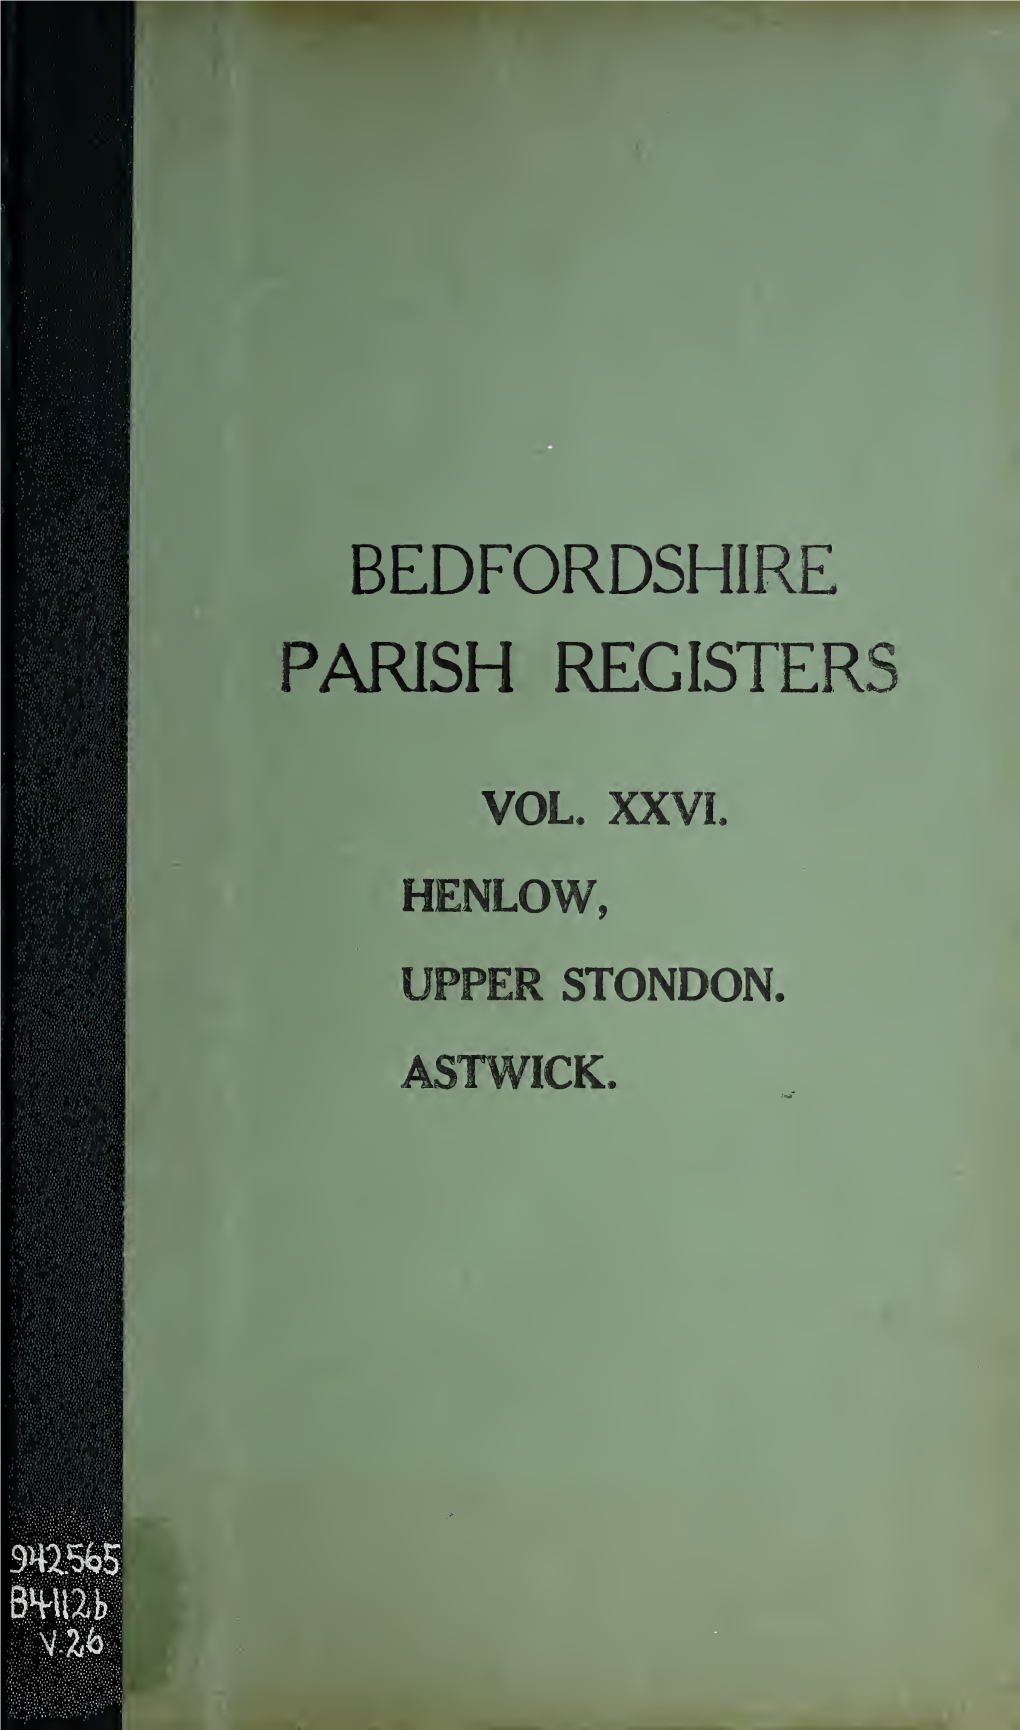 Bedfordshire Parish Registers